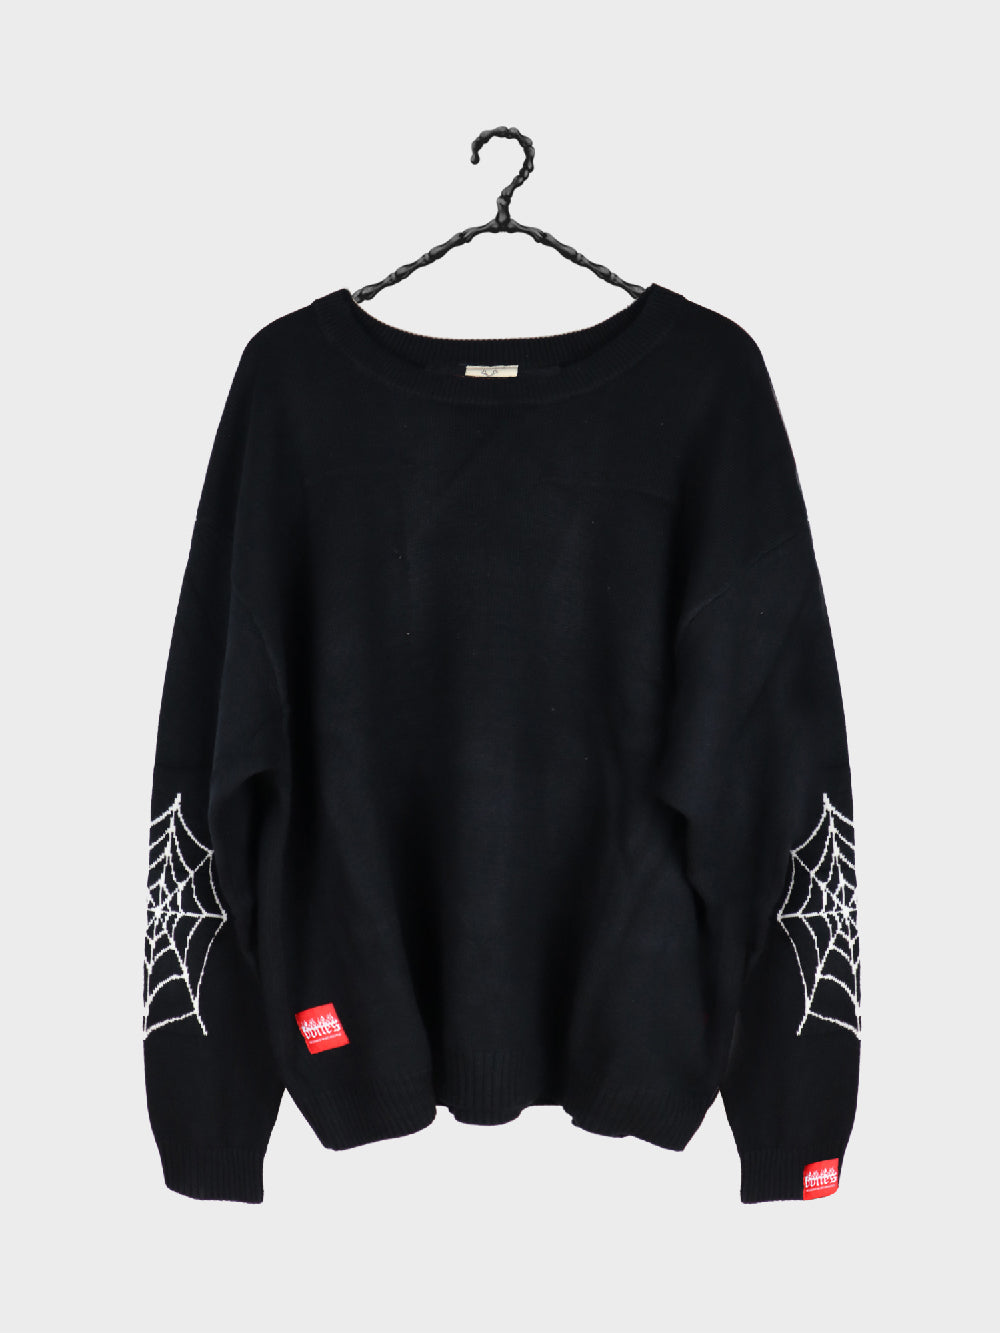 Bones Black Spider Knit